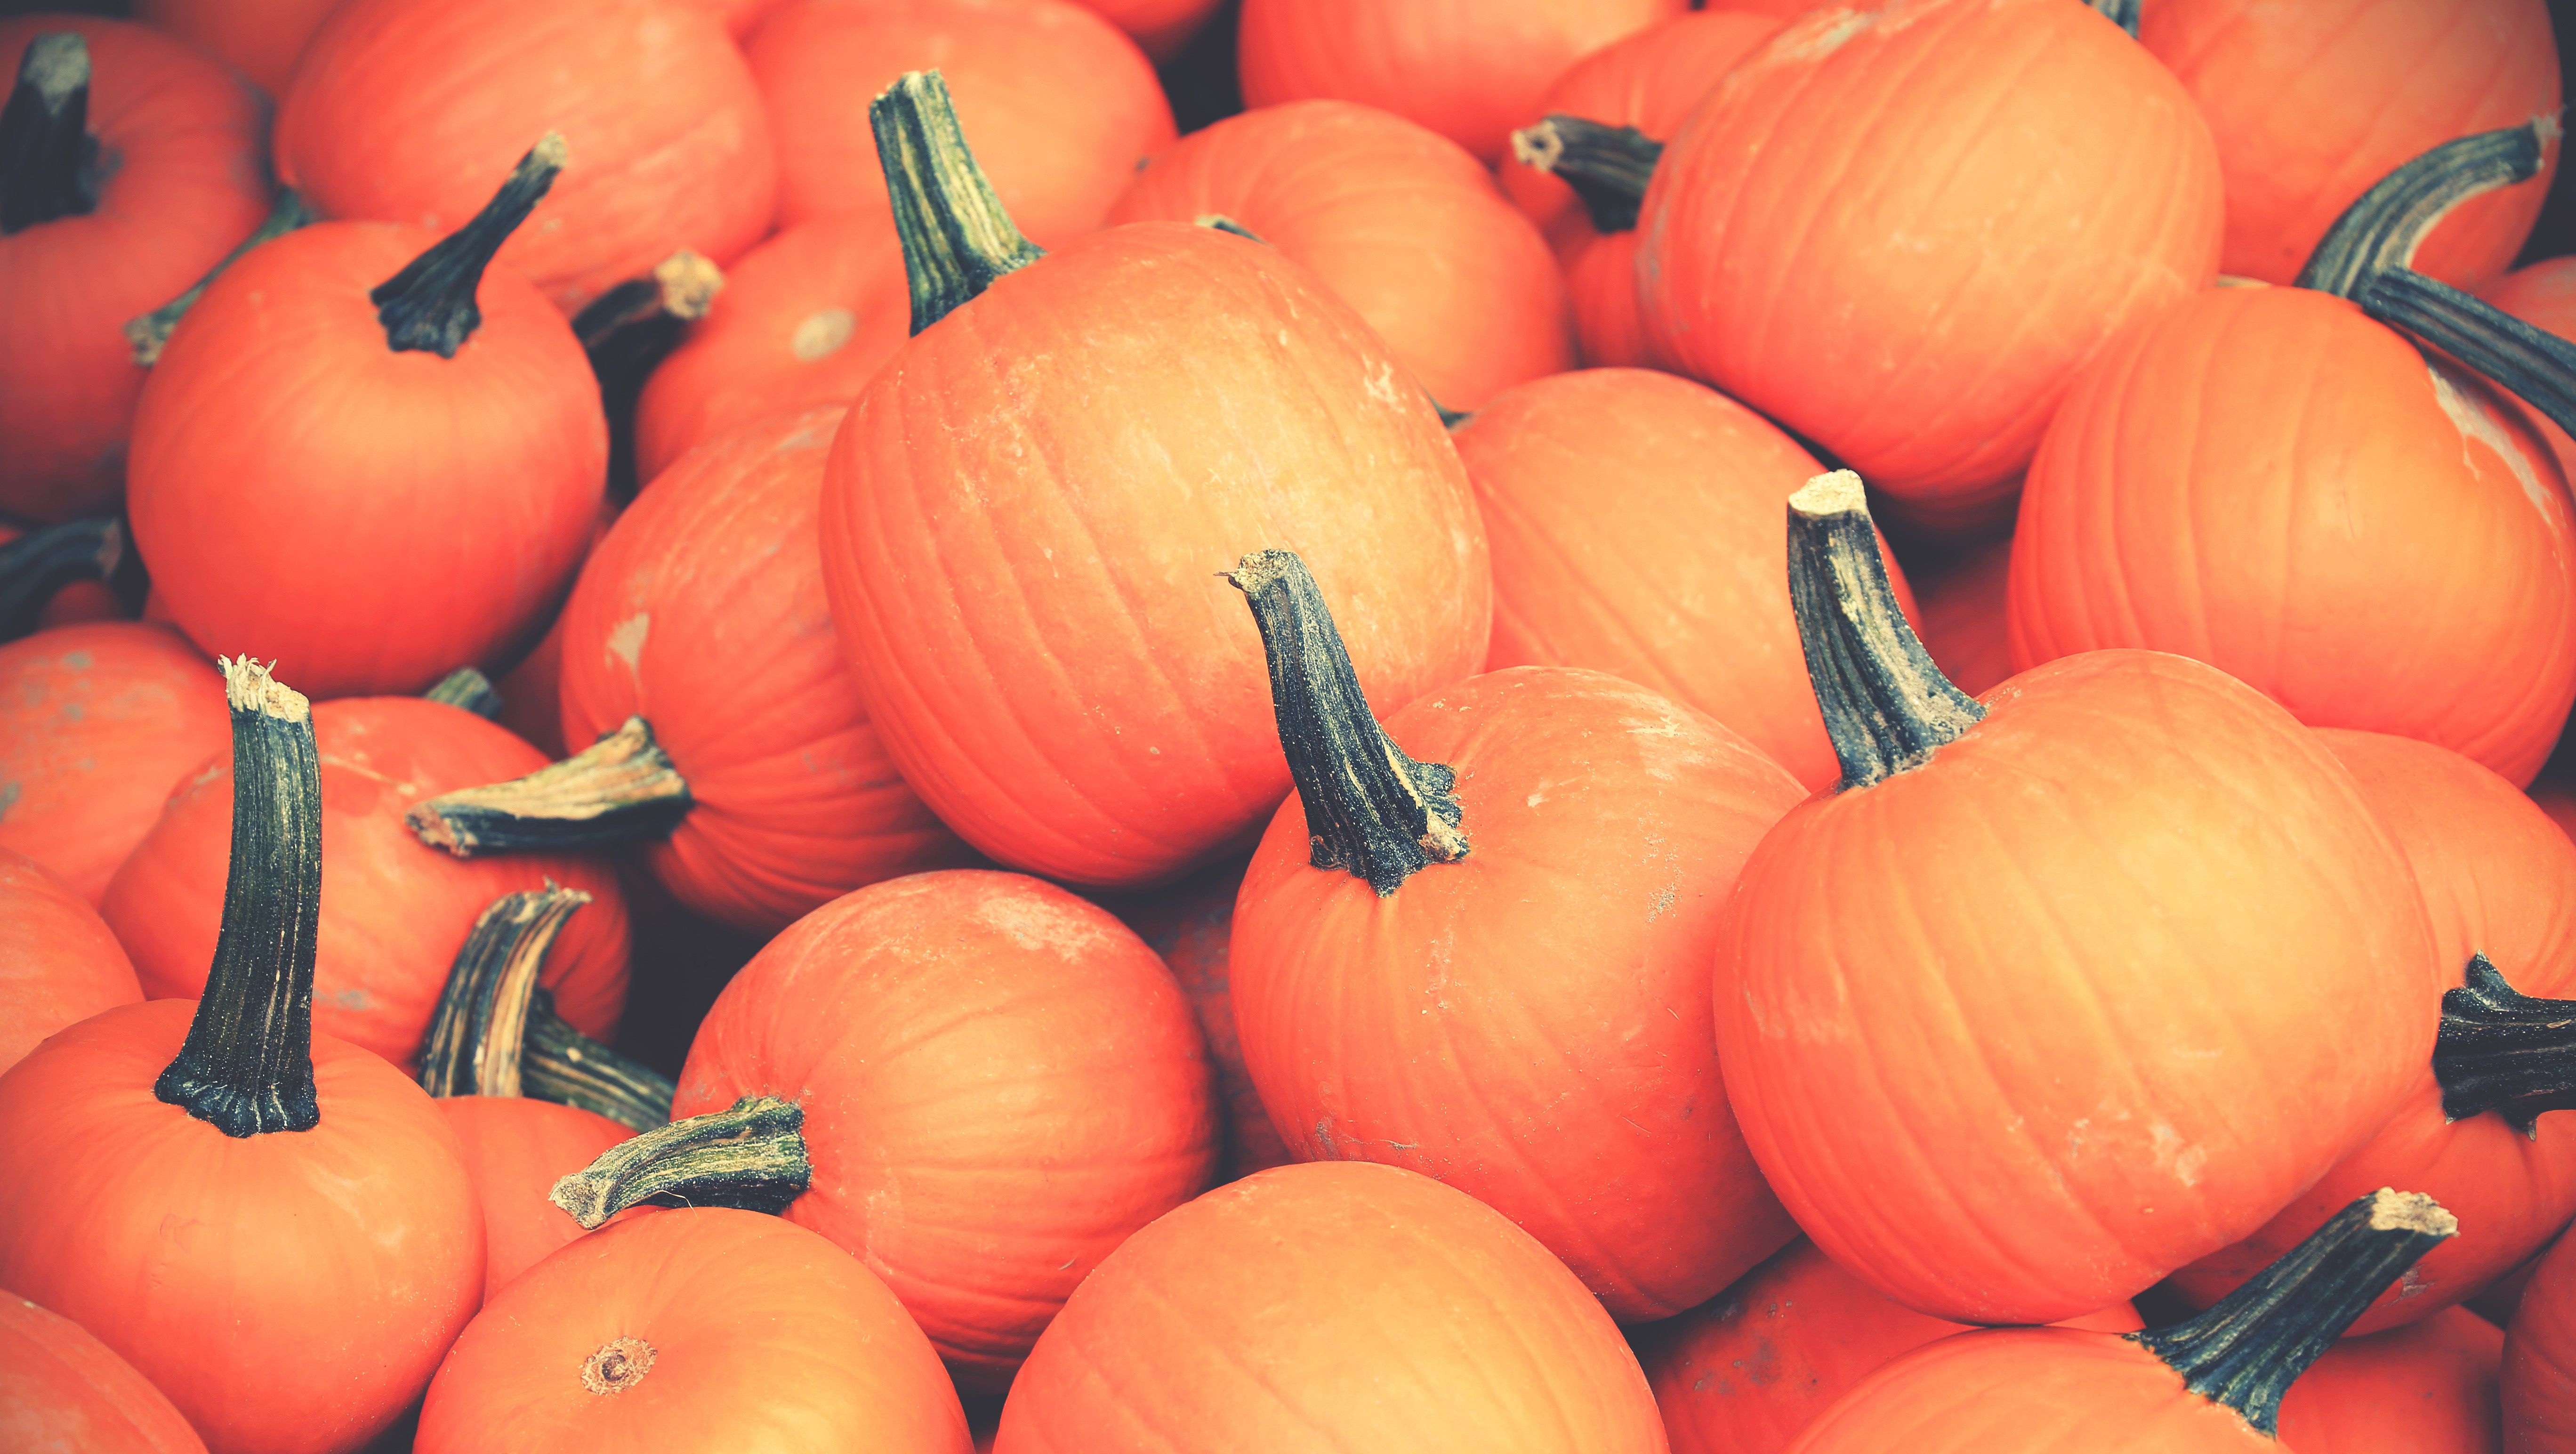 5472x3088 #fall festival, #september, #fall, #food, #autumn, #orange, #pumpkin, #pumpkin patch, #gourd, #collection, #farmers market, #halloween, #vegetable, #harvest, #PNG image, #color, #patch, #bundle, #october, #eat. Mocah.org HD Wallpaper